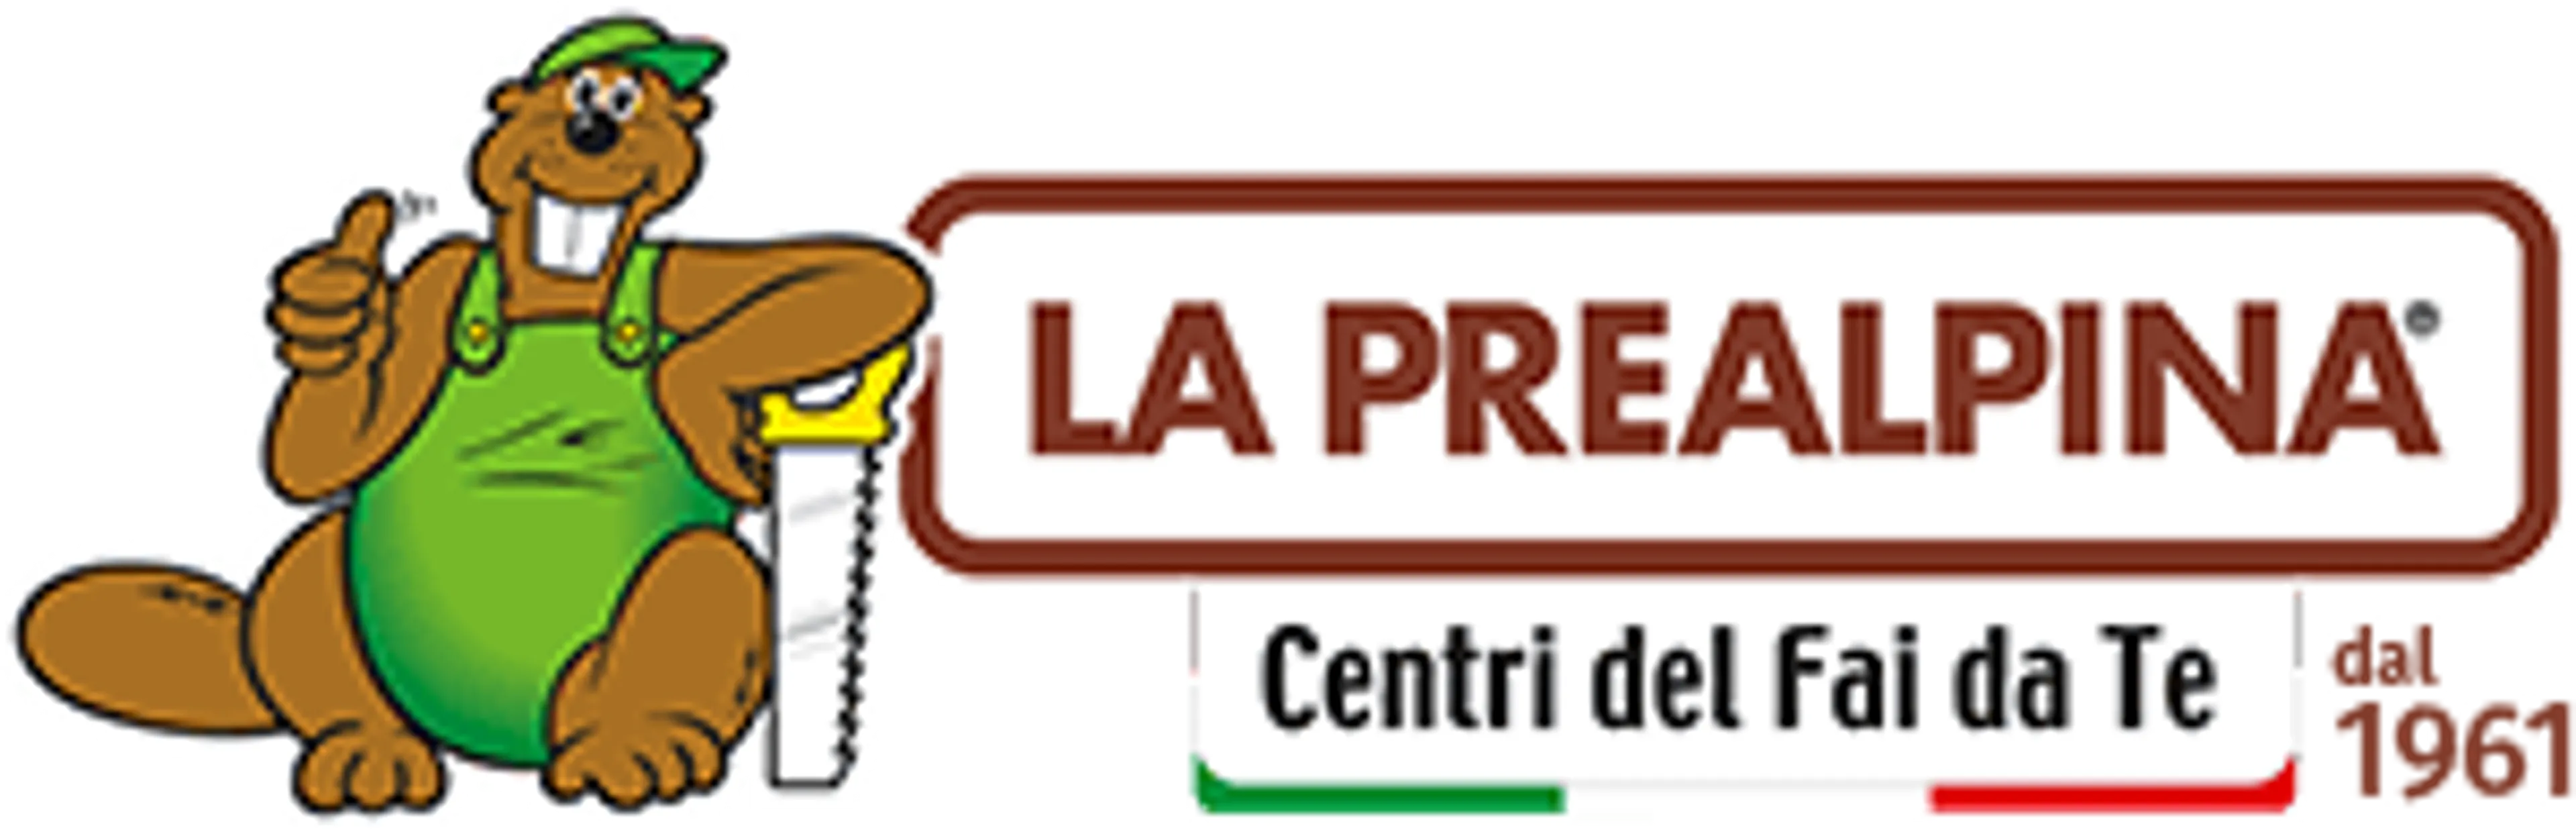 LA PREALPINA logo